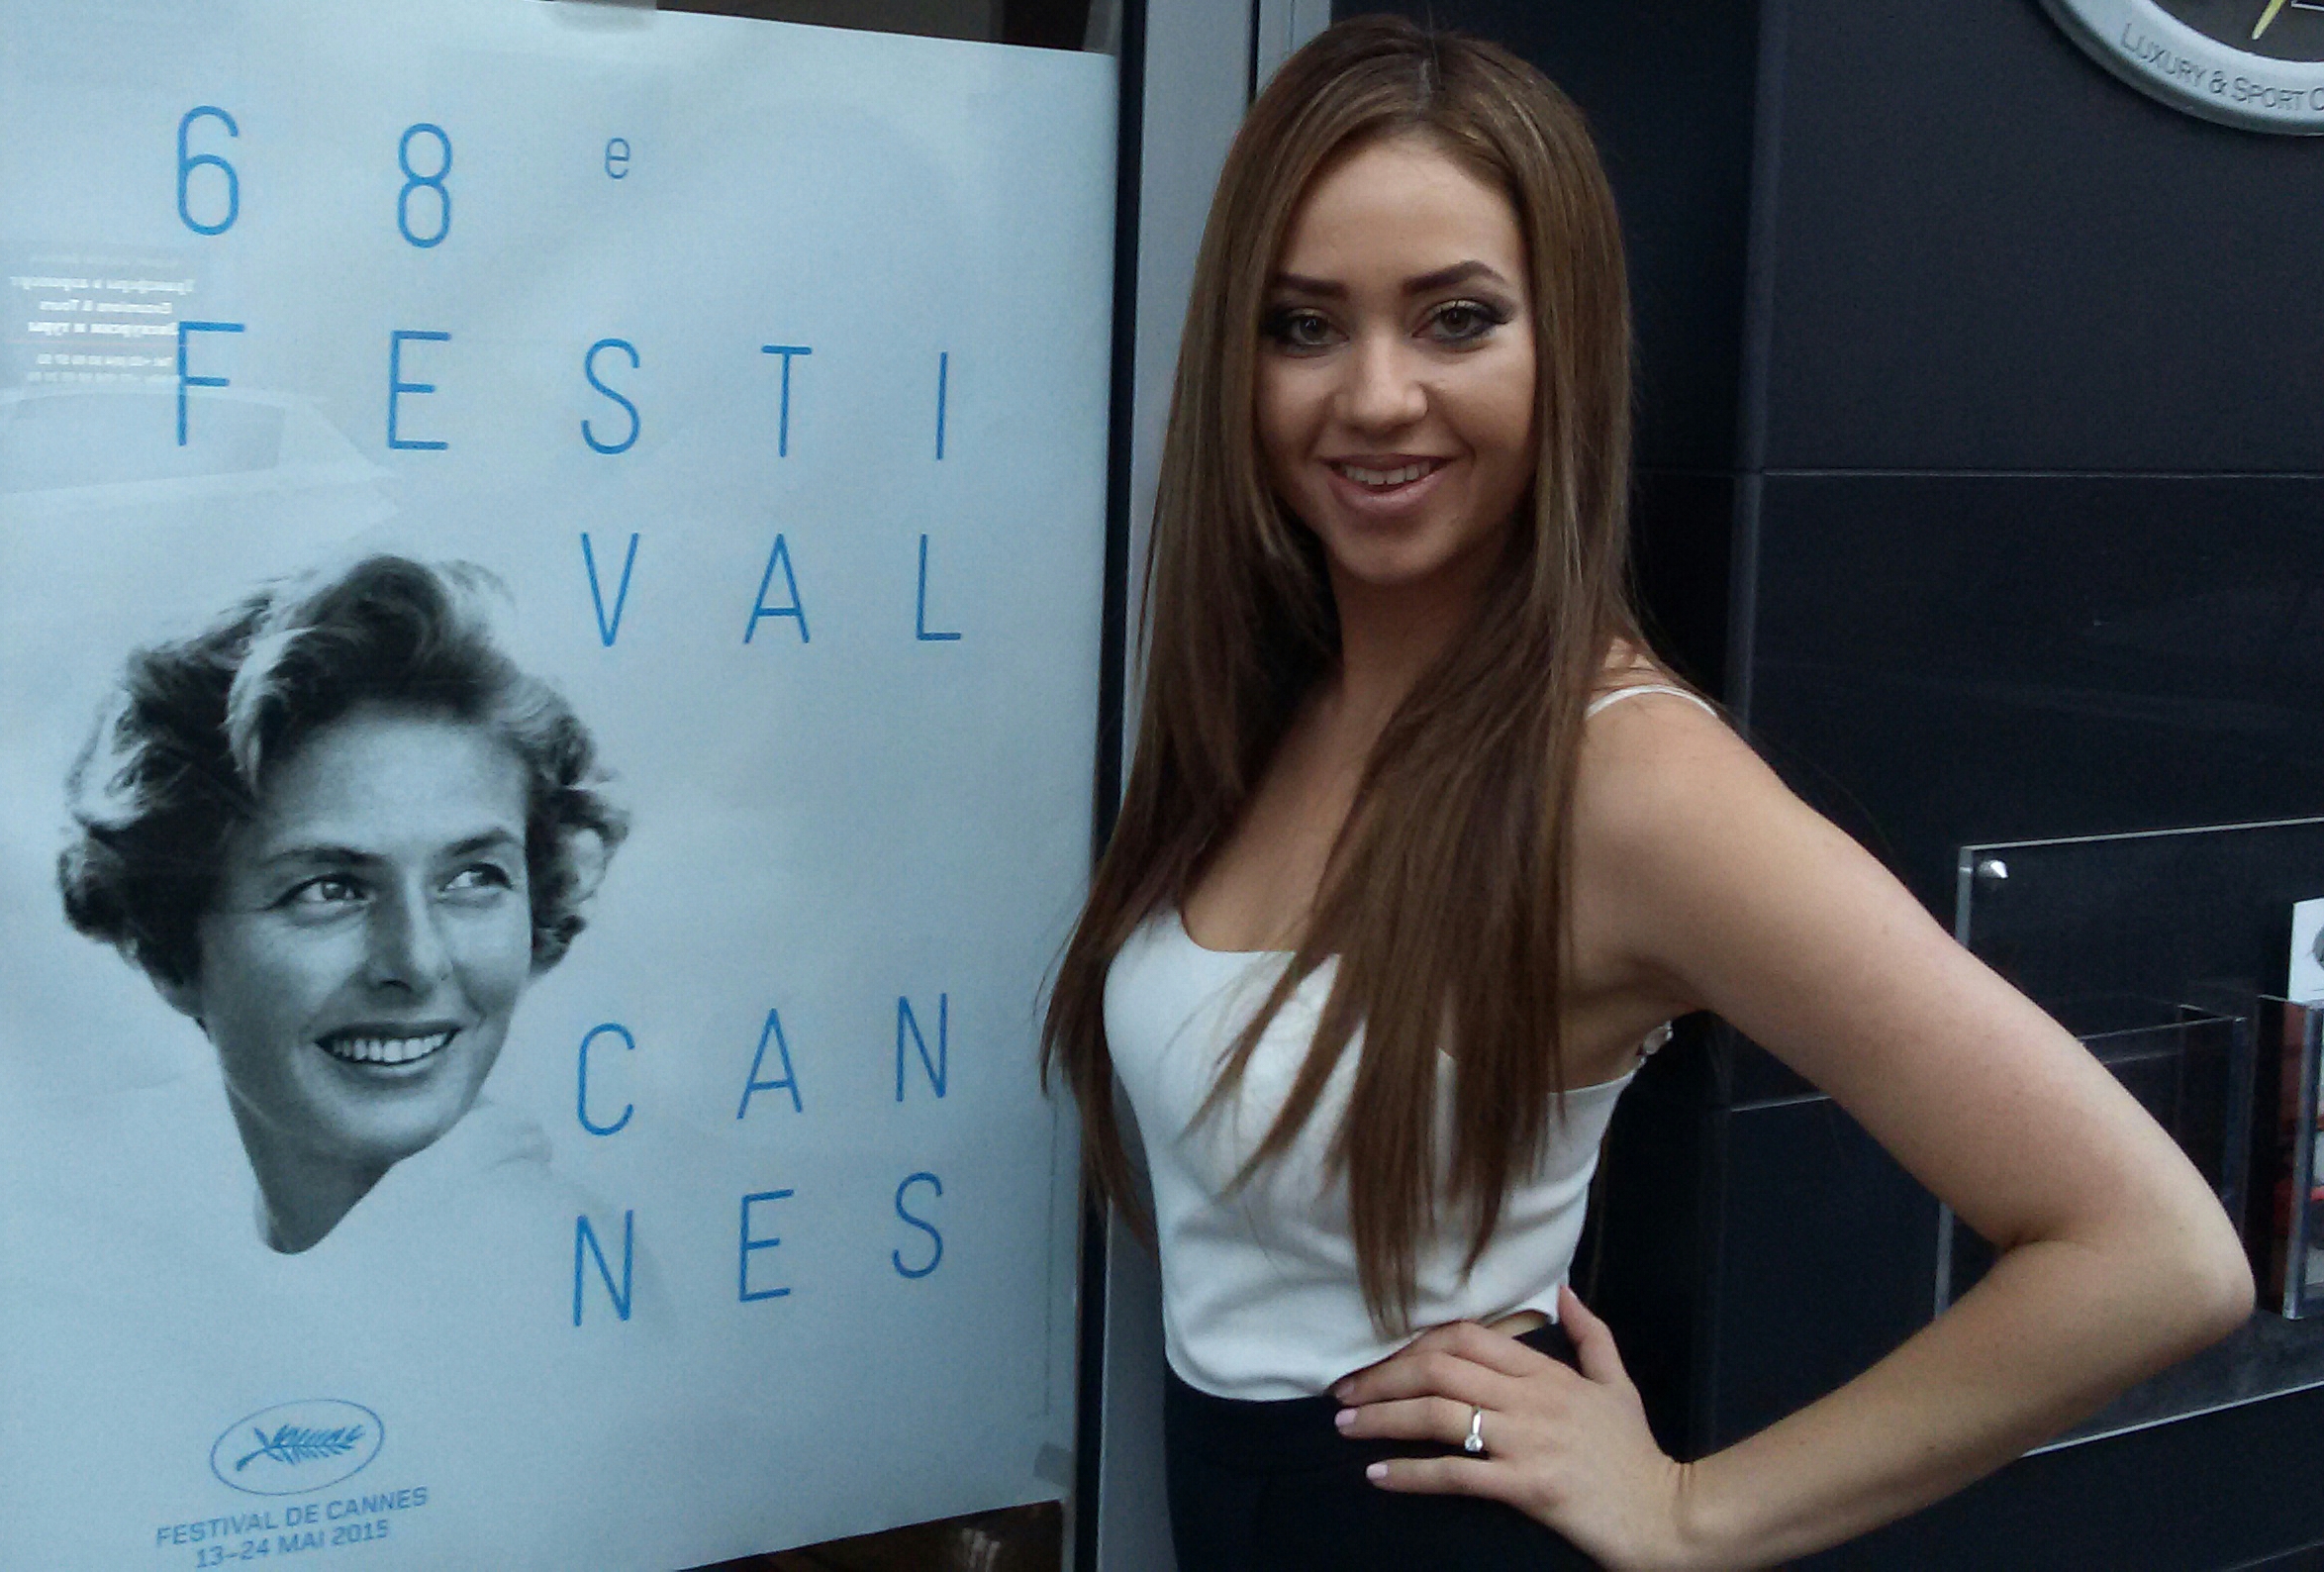 Attending Festival de Cannes for 